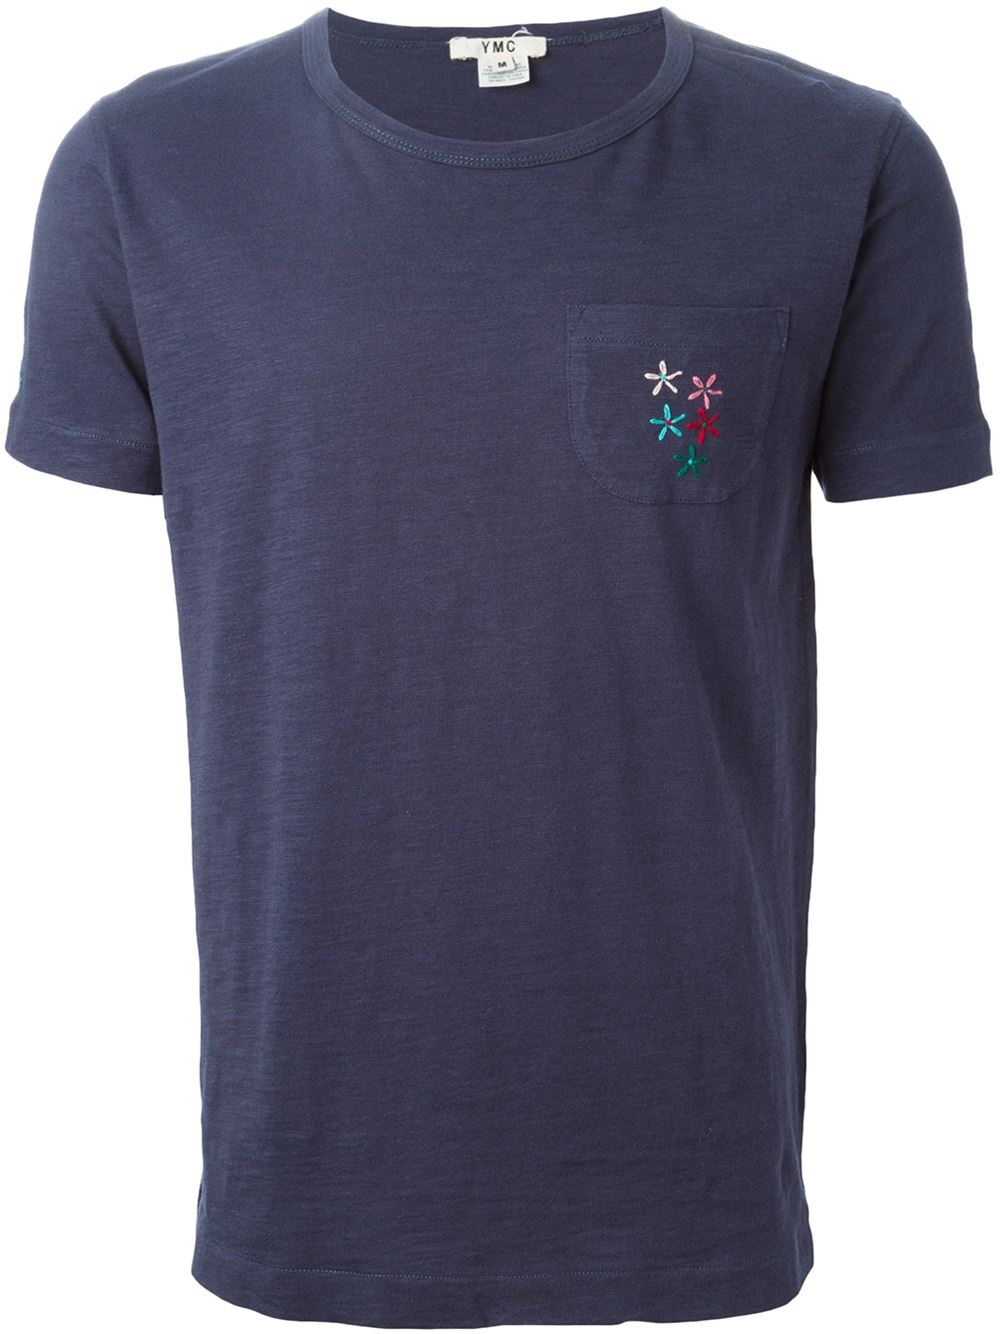 Lyst - Ymc Flower Embroidered Pocket T-Shirt in Blue for Men